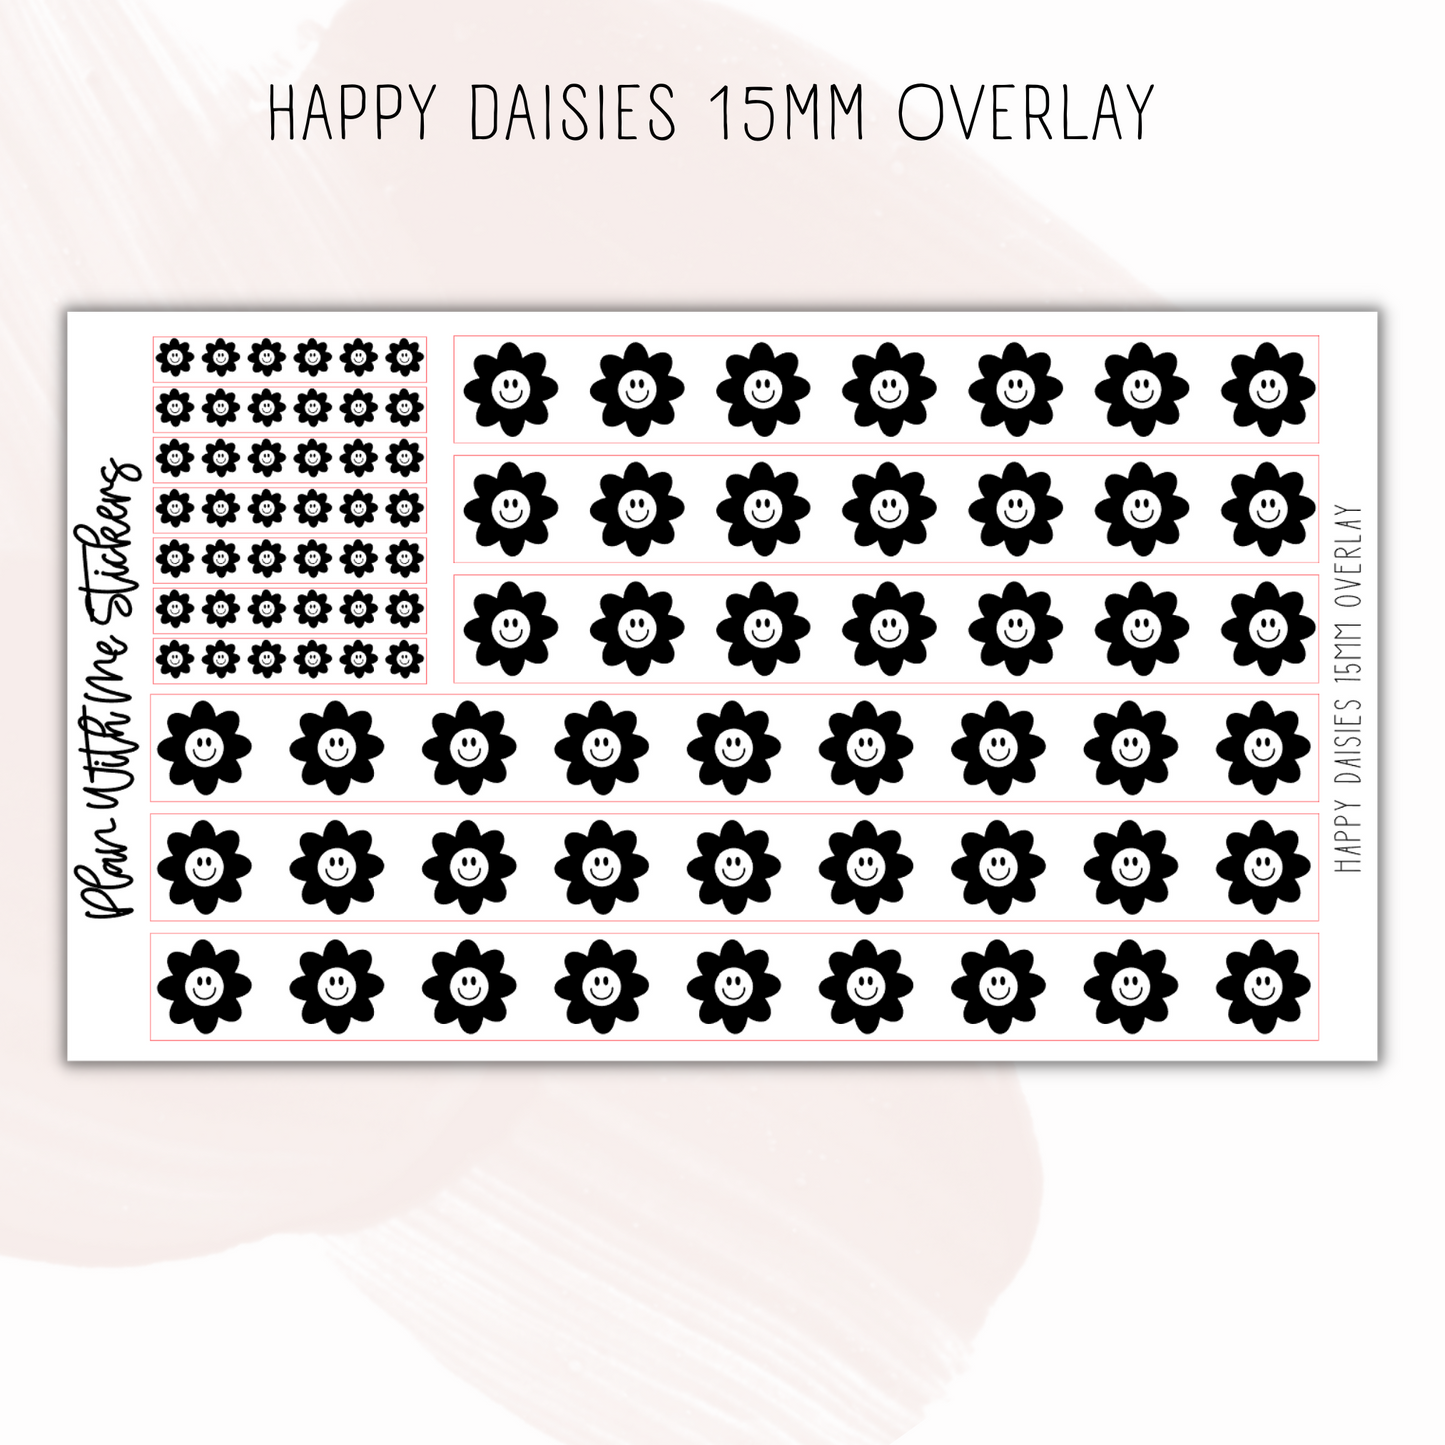 Happy Daisies 15mm Overlay